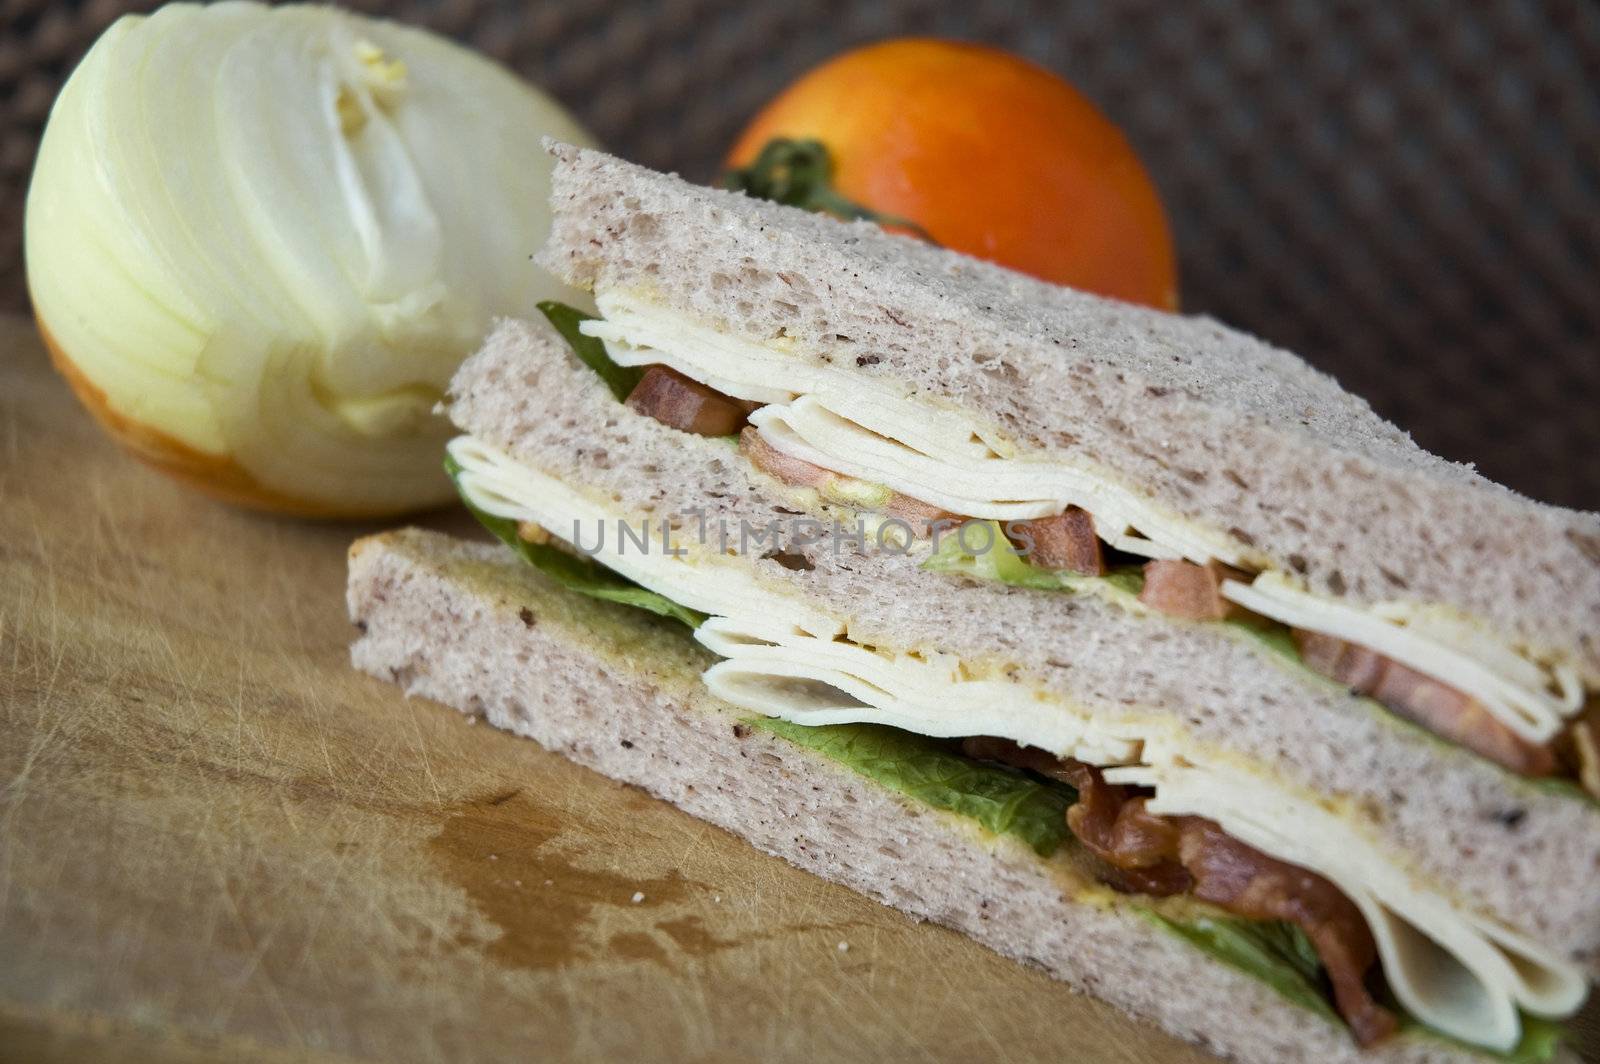 homemade sandwich by daniaphoto